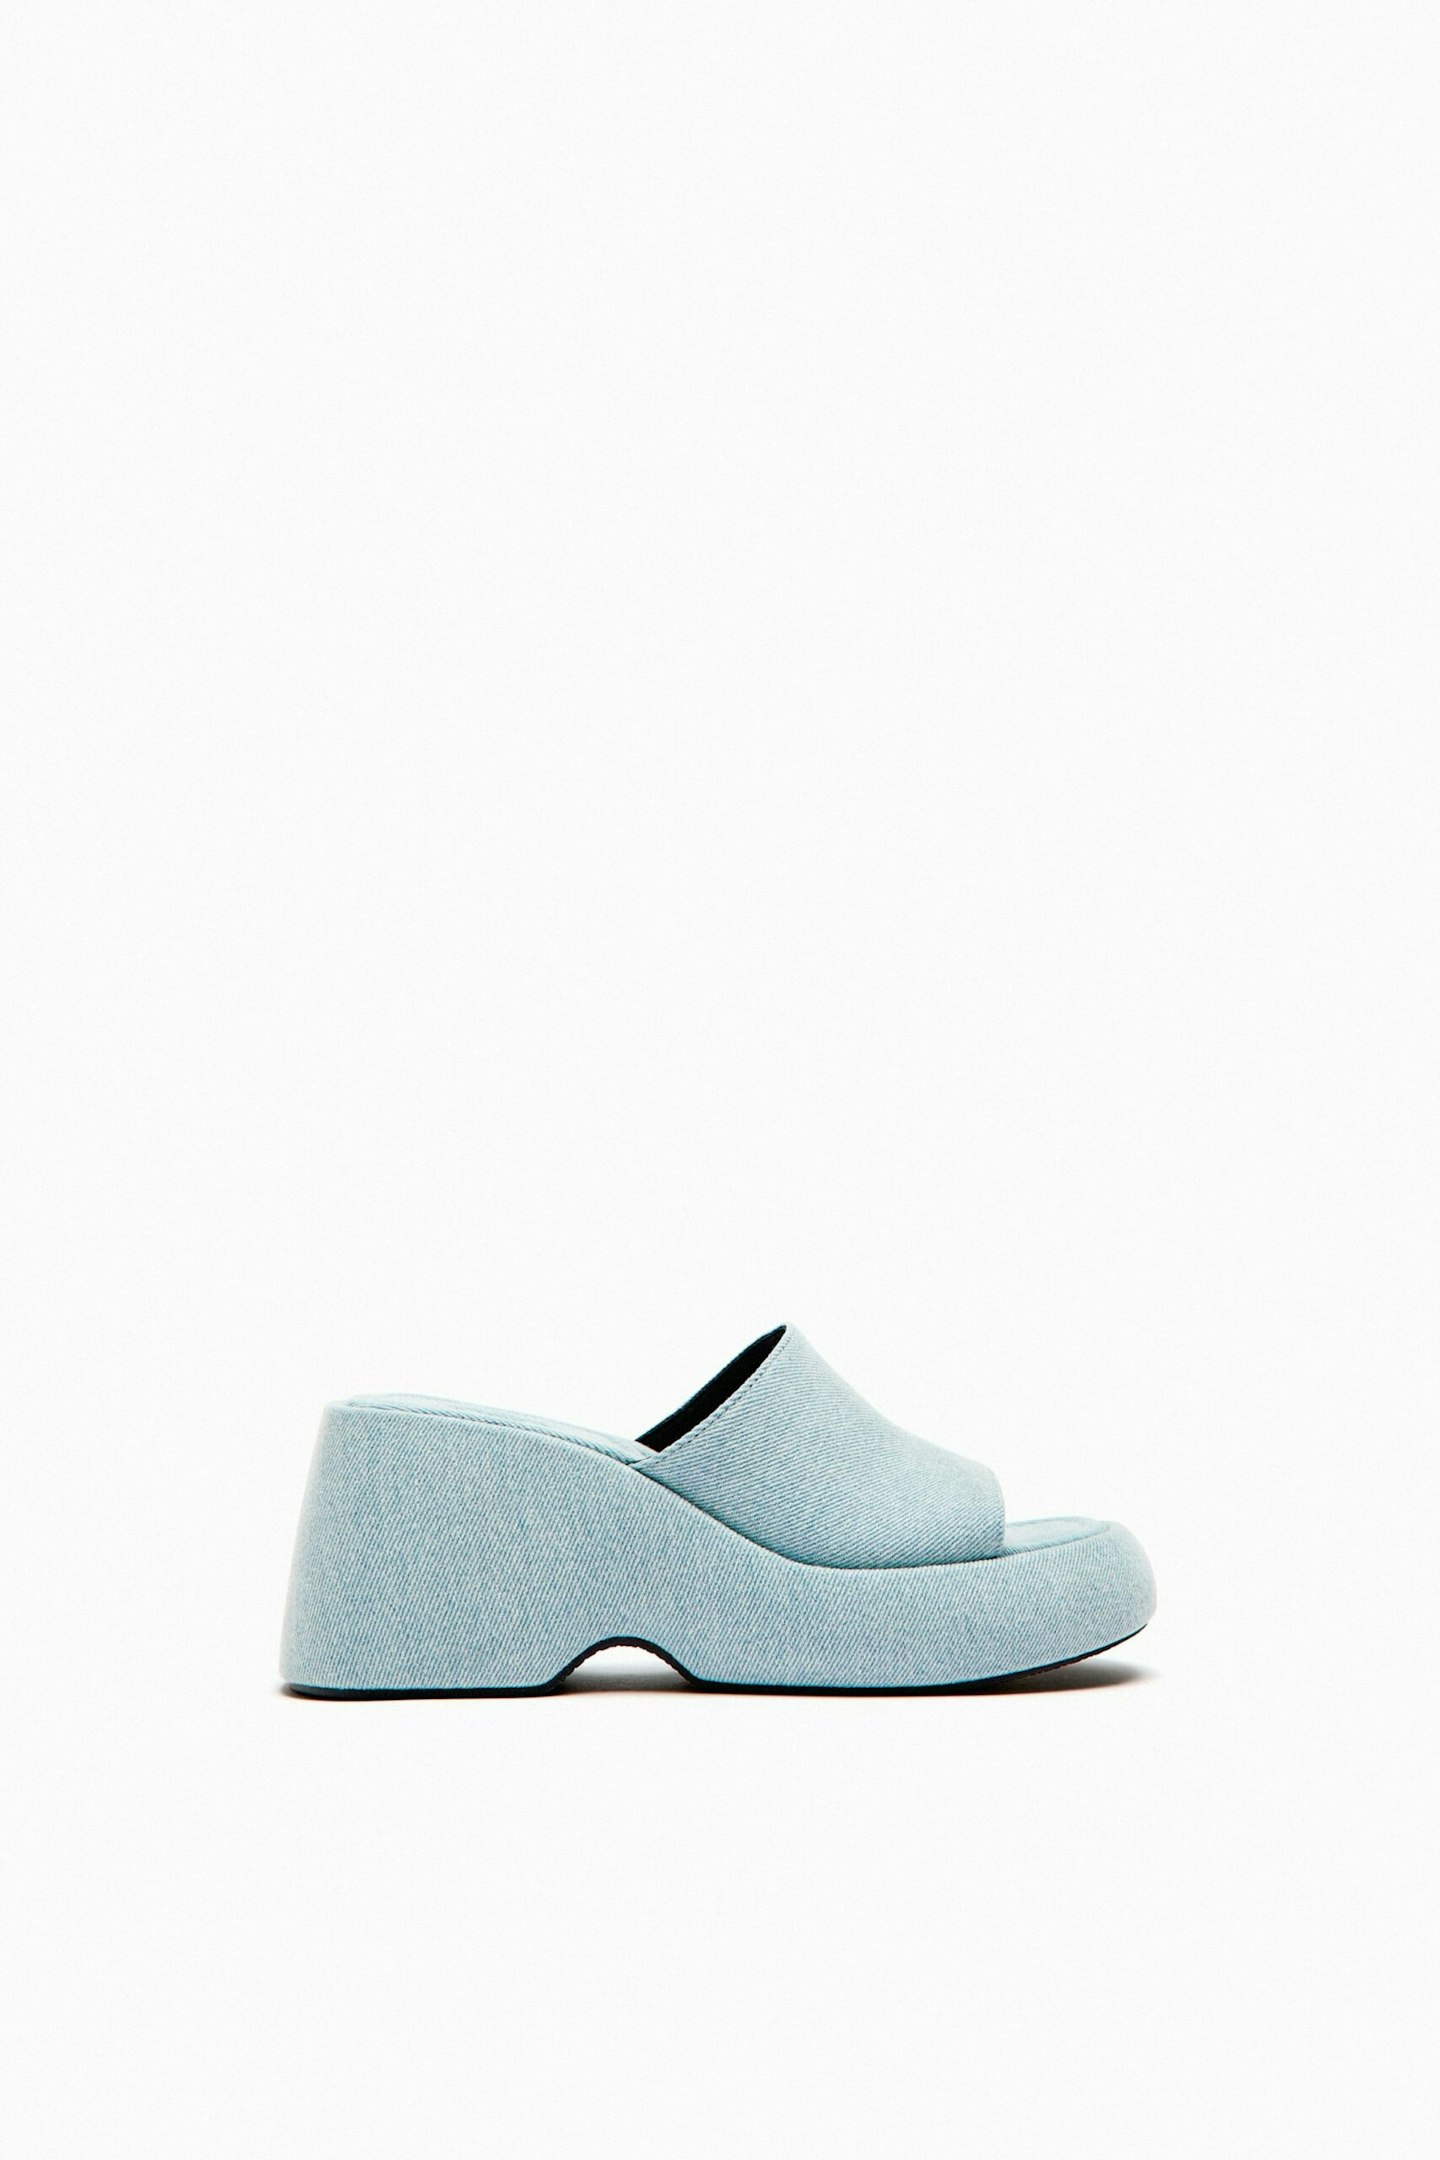 Zara, Denim Wedge Sandals